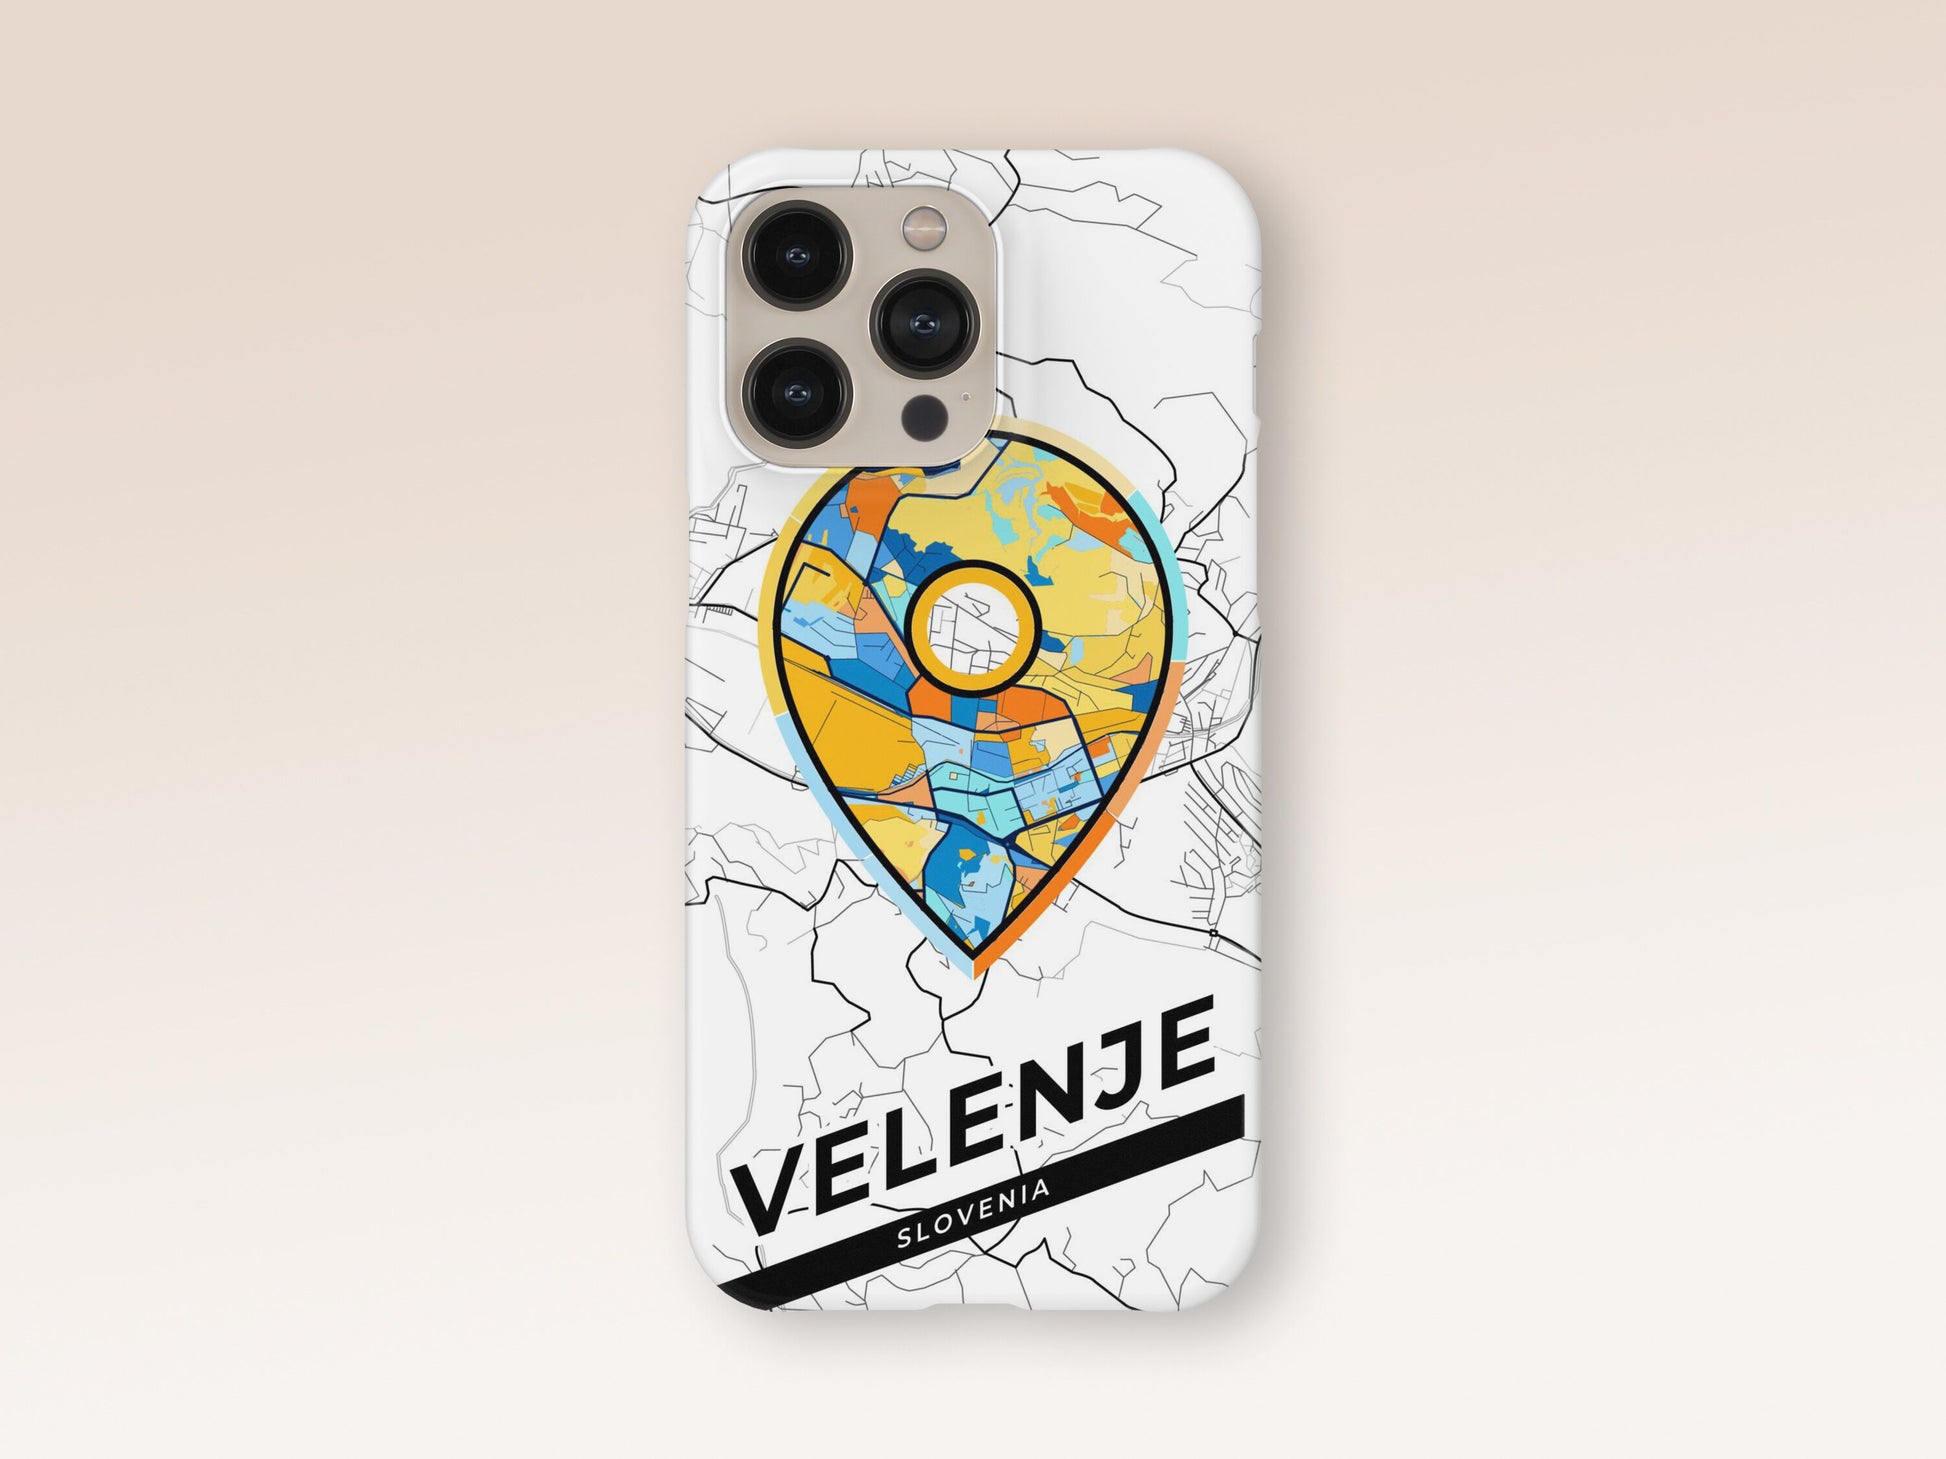 Velenje Slovenia slim phone case with colorful icon 1